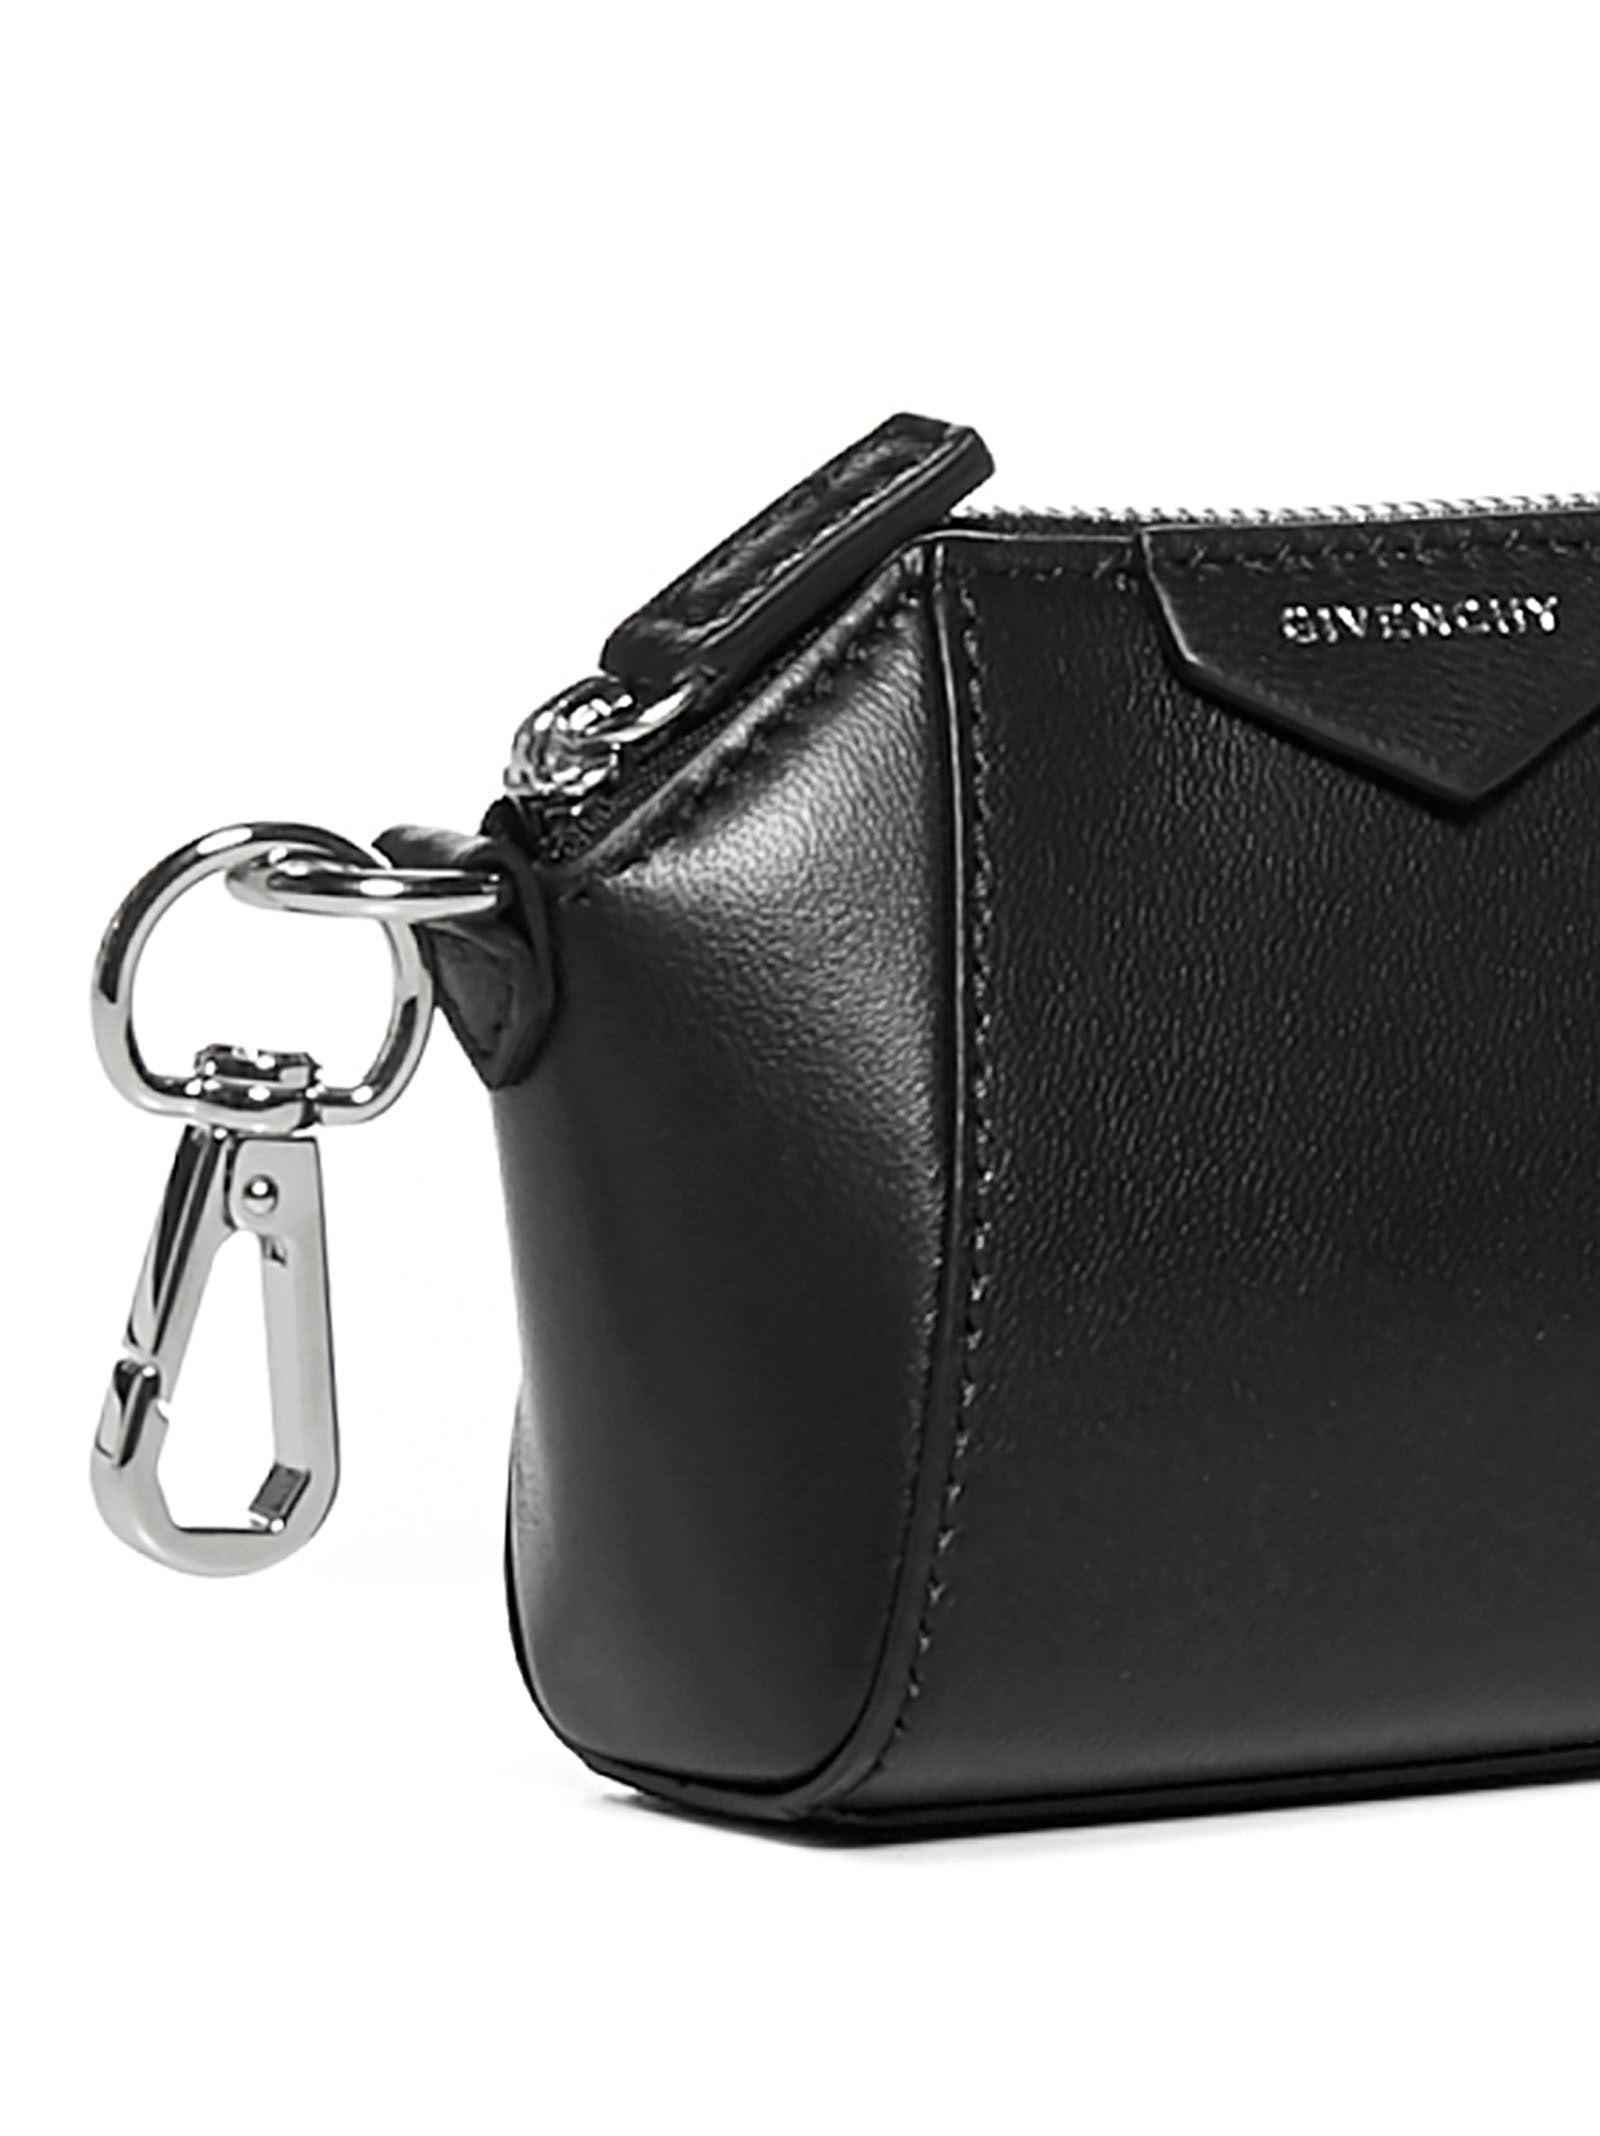 Amazon.com: Zoomoni Premium Bag Organizer for Givenchy Pandora Small Bag  Insert Organizer (Bag Length 27cm/10.5″) (Handmade/20 Color Options) [Purse  Organiser, Liner, Insert, Shaper] : Handmade Products